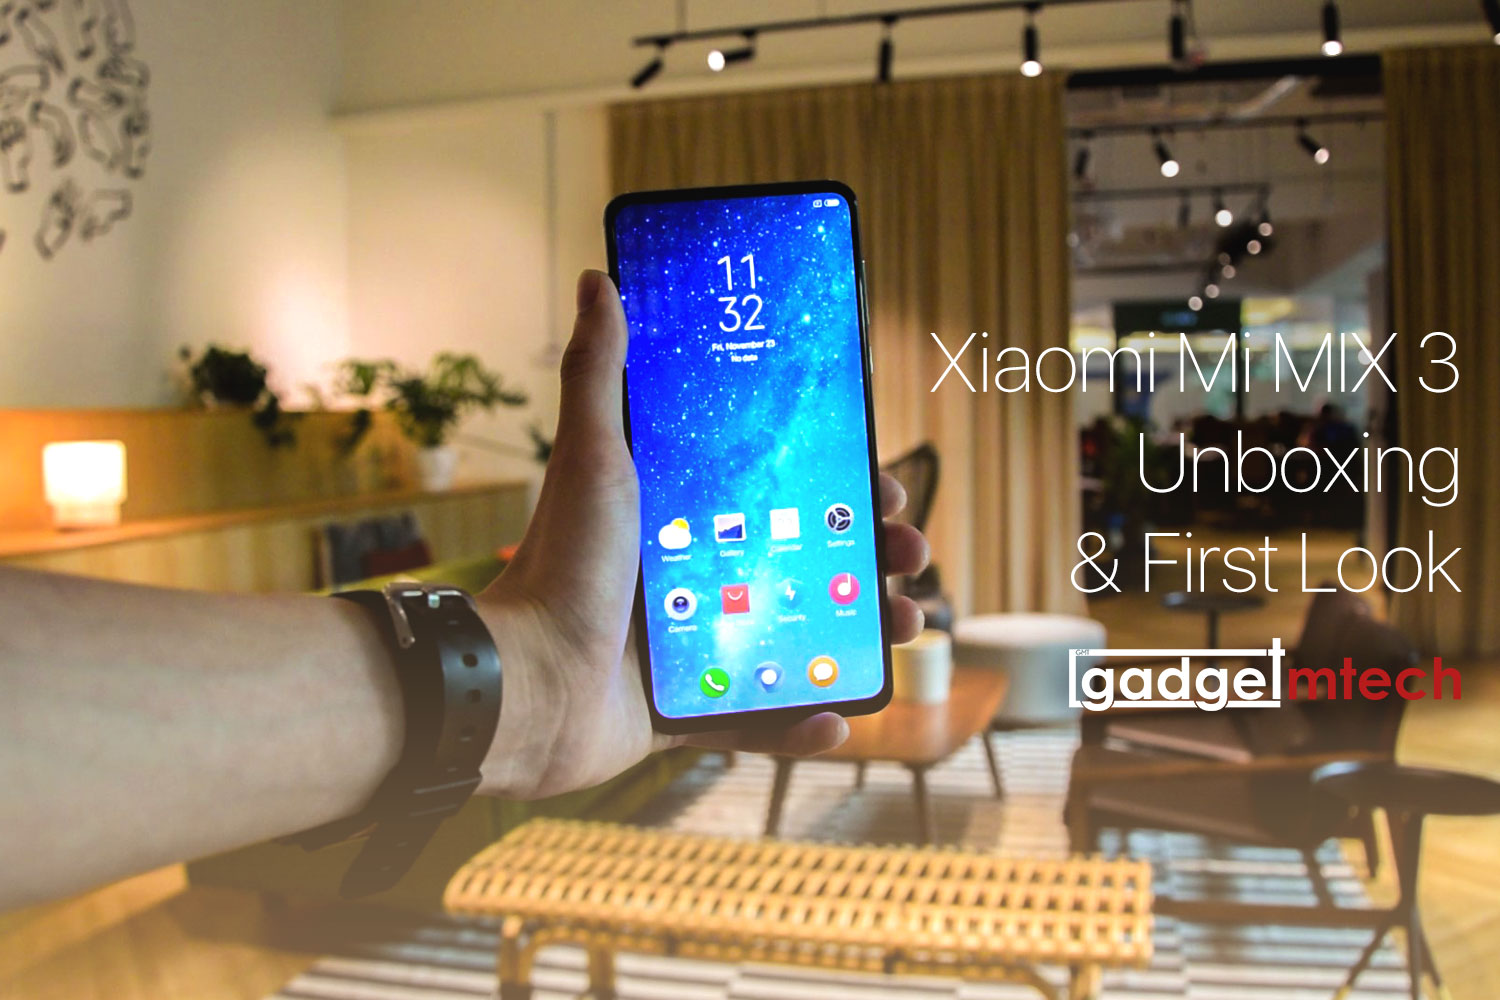 Unboxing & First Look: Xiaomi Mi MIX 3